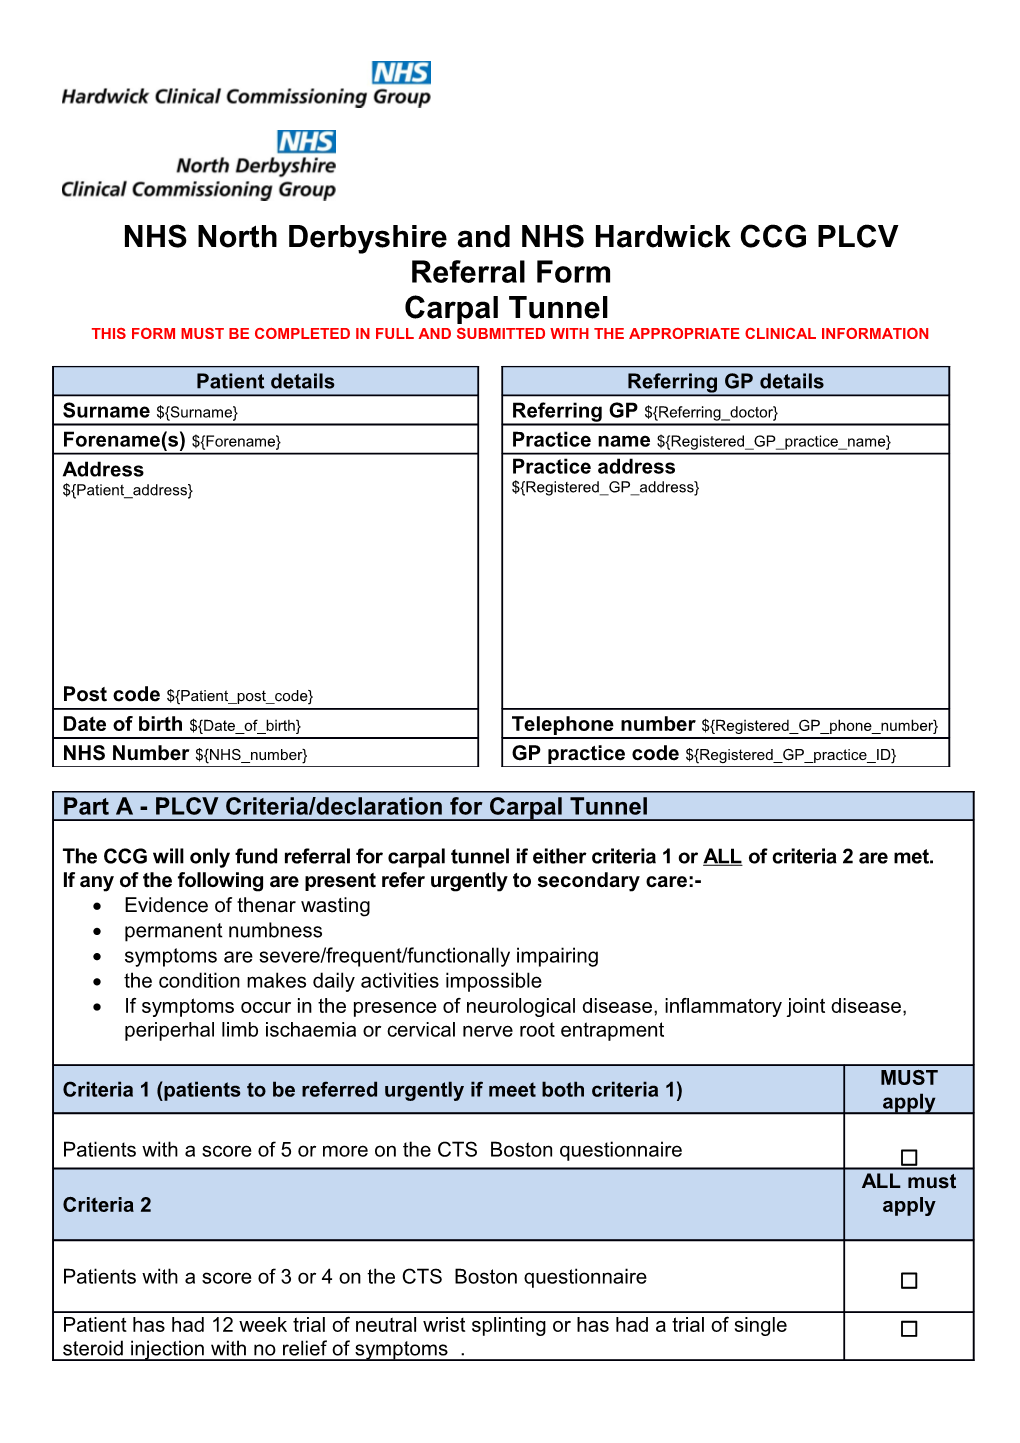 NHS North Derbyshire and NHS Hardwick CCG PLCV Referral Form